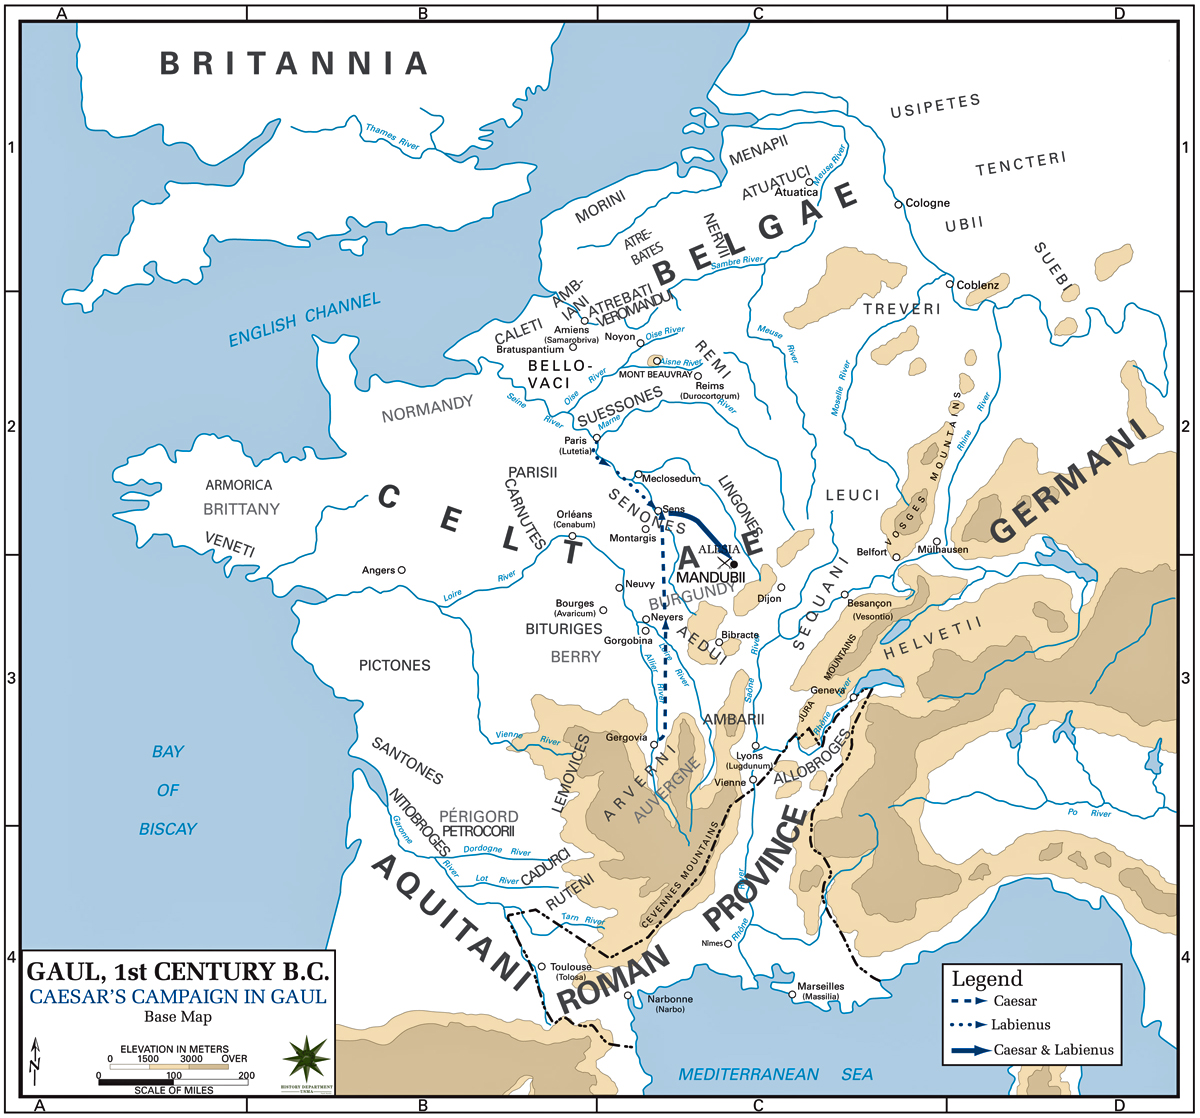 Caesar Campaigns 52 BC in Gaul Map gergovia_alesia .jpg